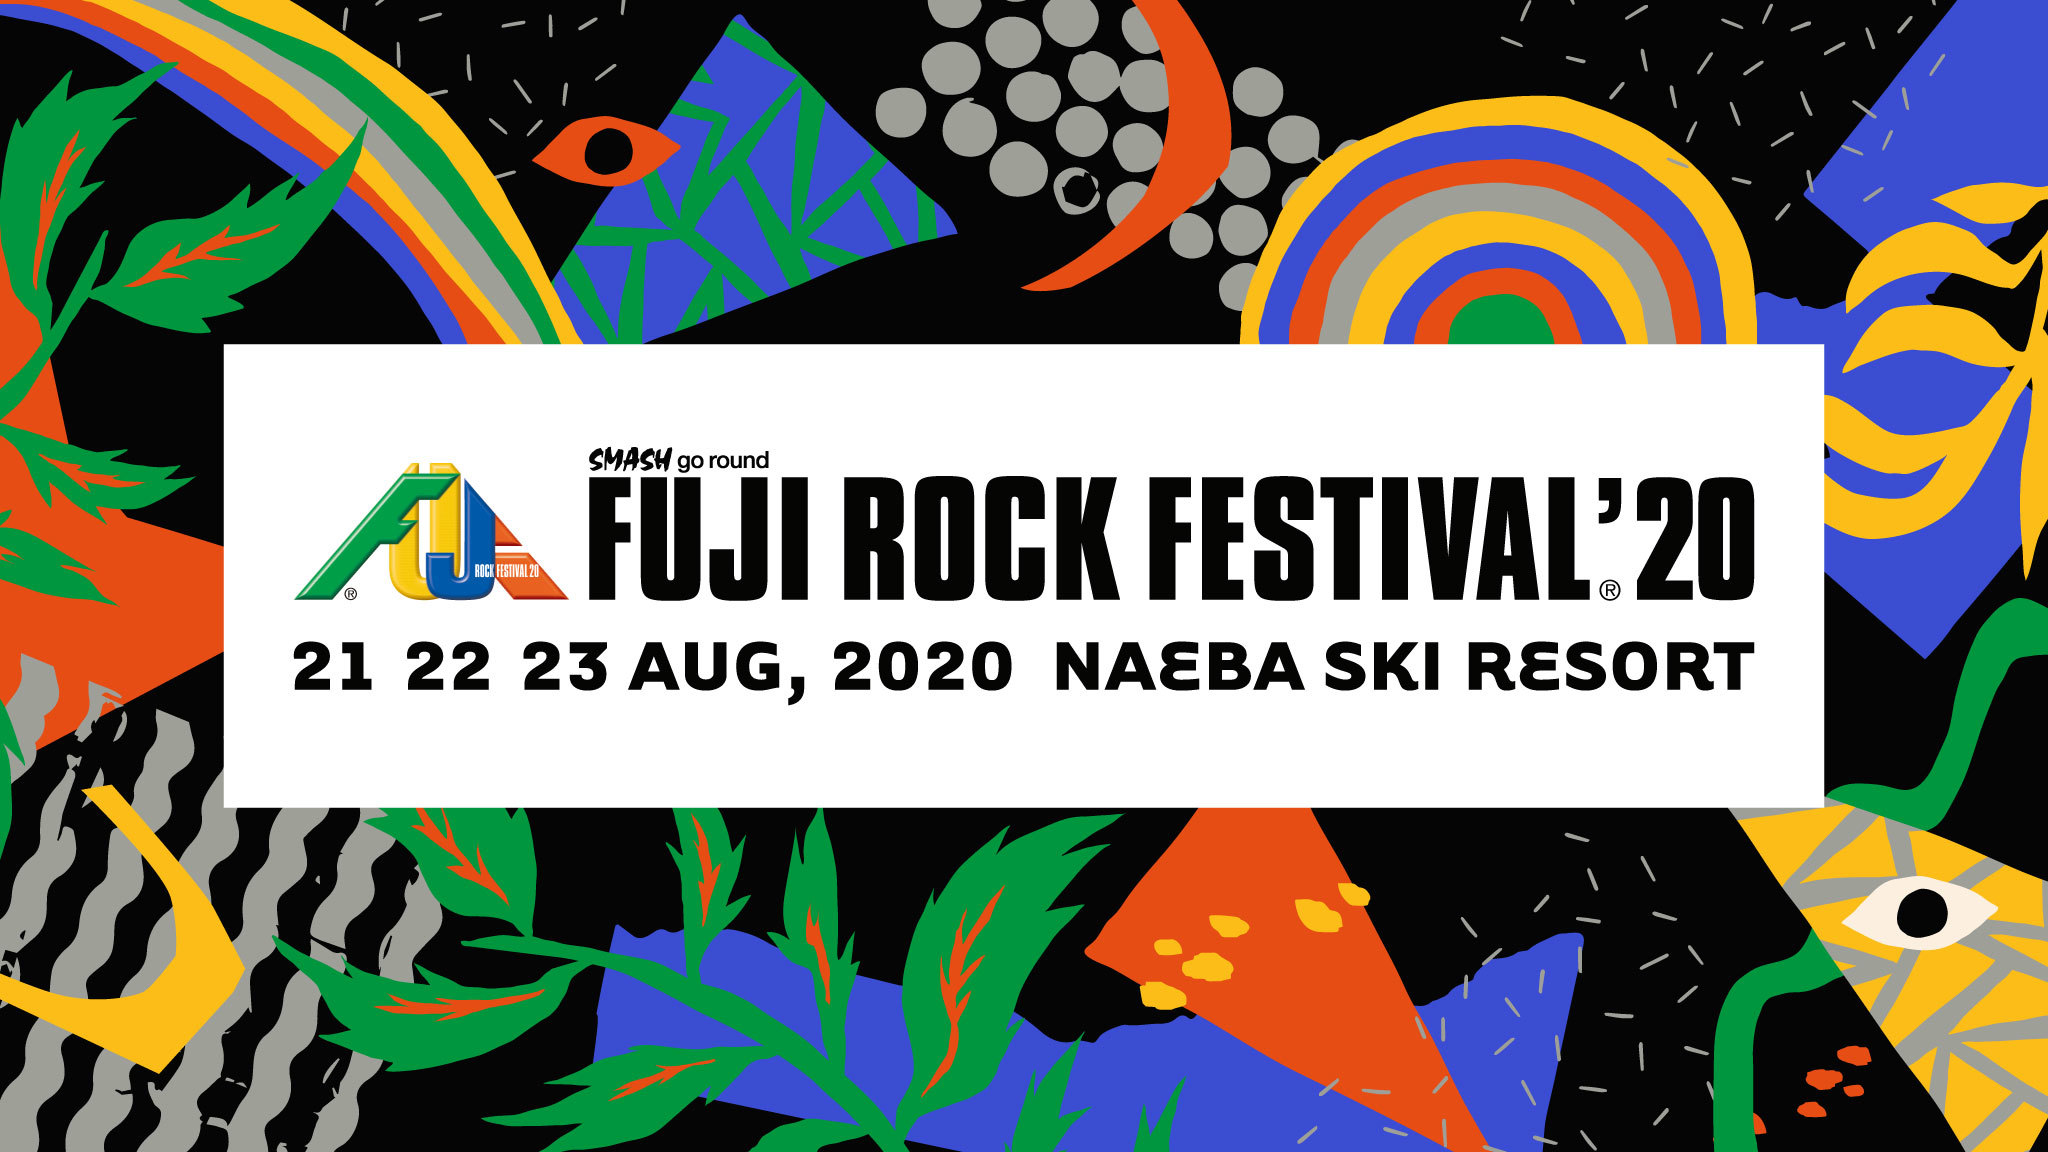 FUJI ROCK FESTIVAL'20』早割チケット詳細発表 | SPICE - エンタメ特化型情報メディア スパイス